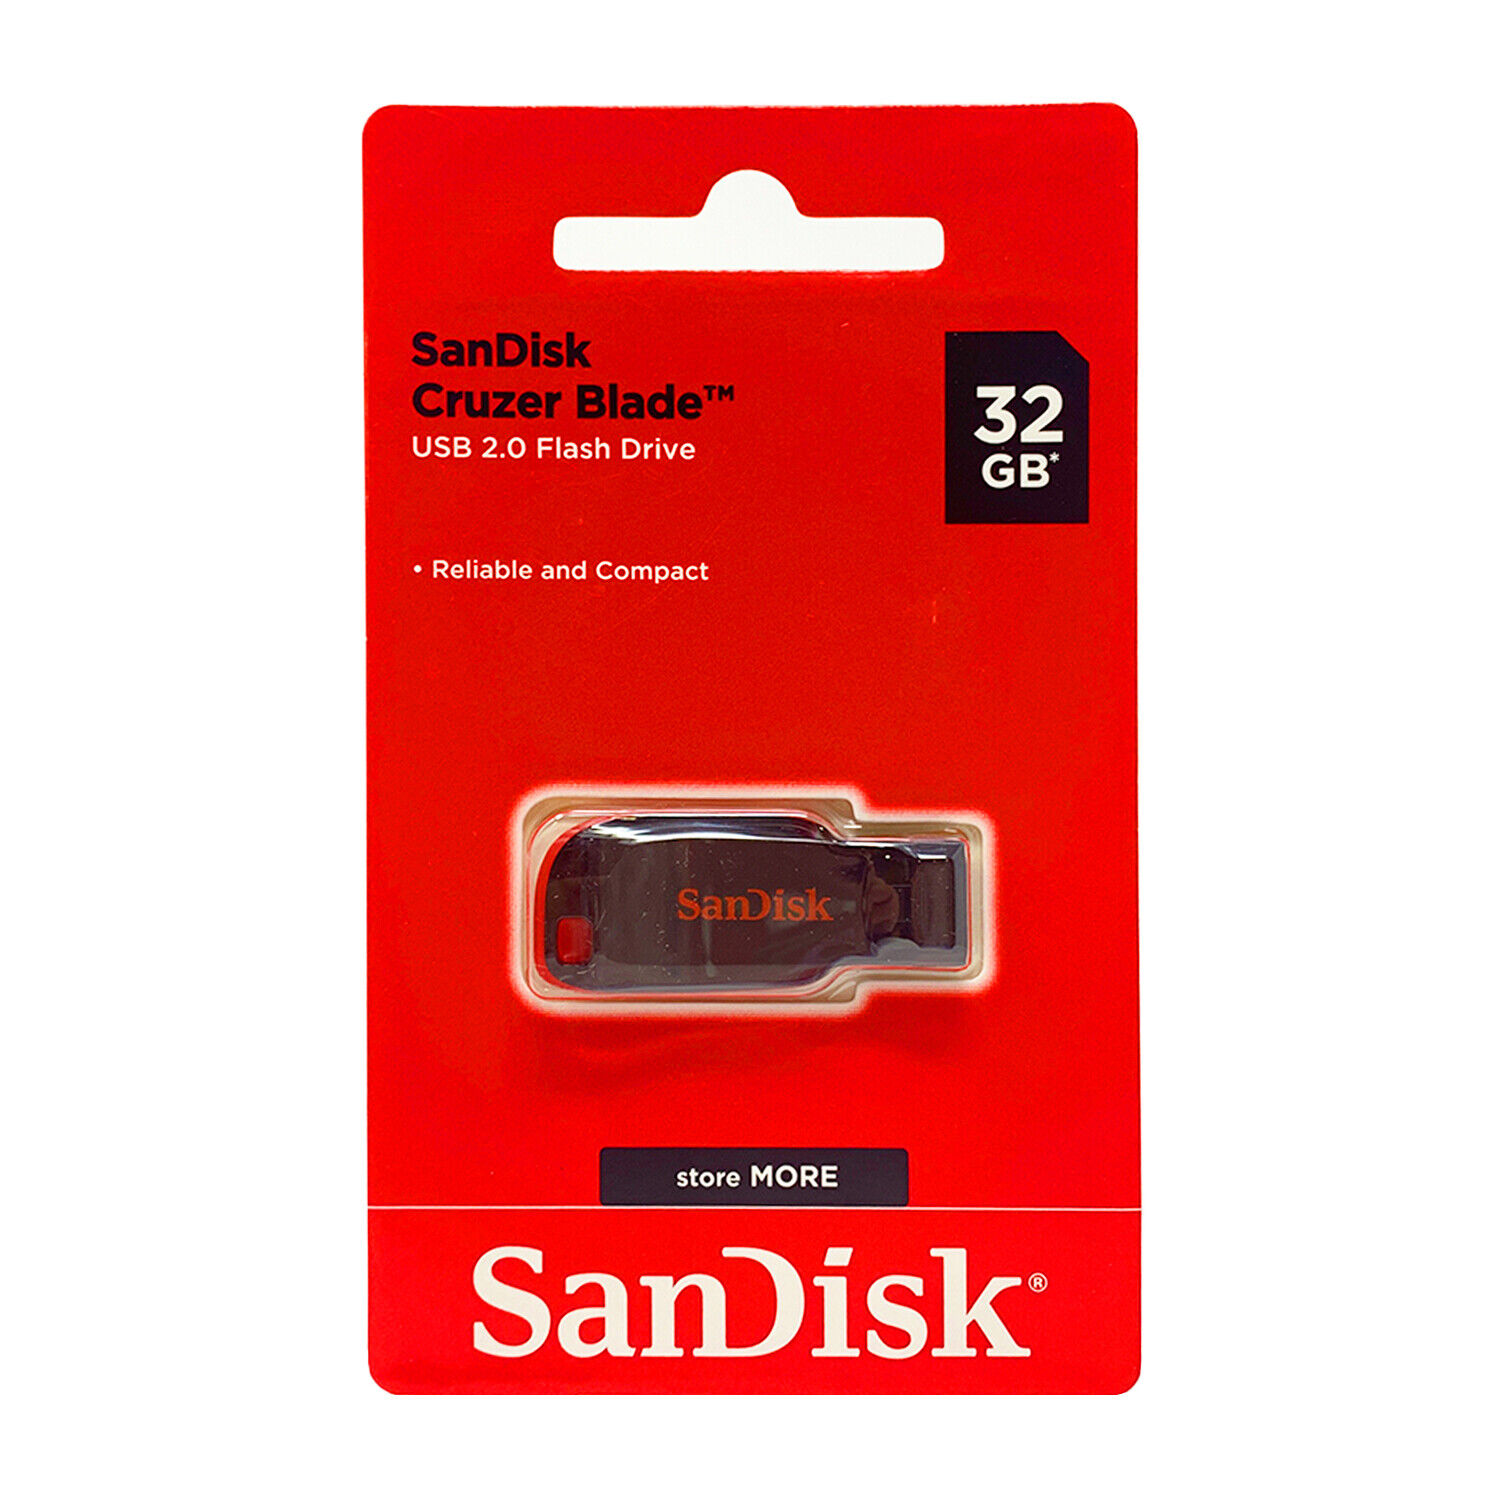 SanDisk  Cruzer Blade 32GB  Flash Drive  USB 2.0 Memory Stick SDCZ50